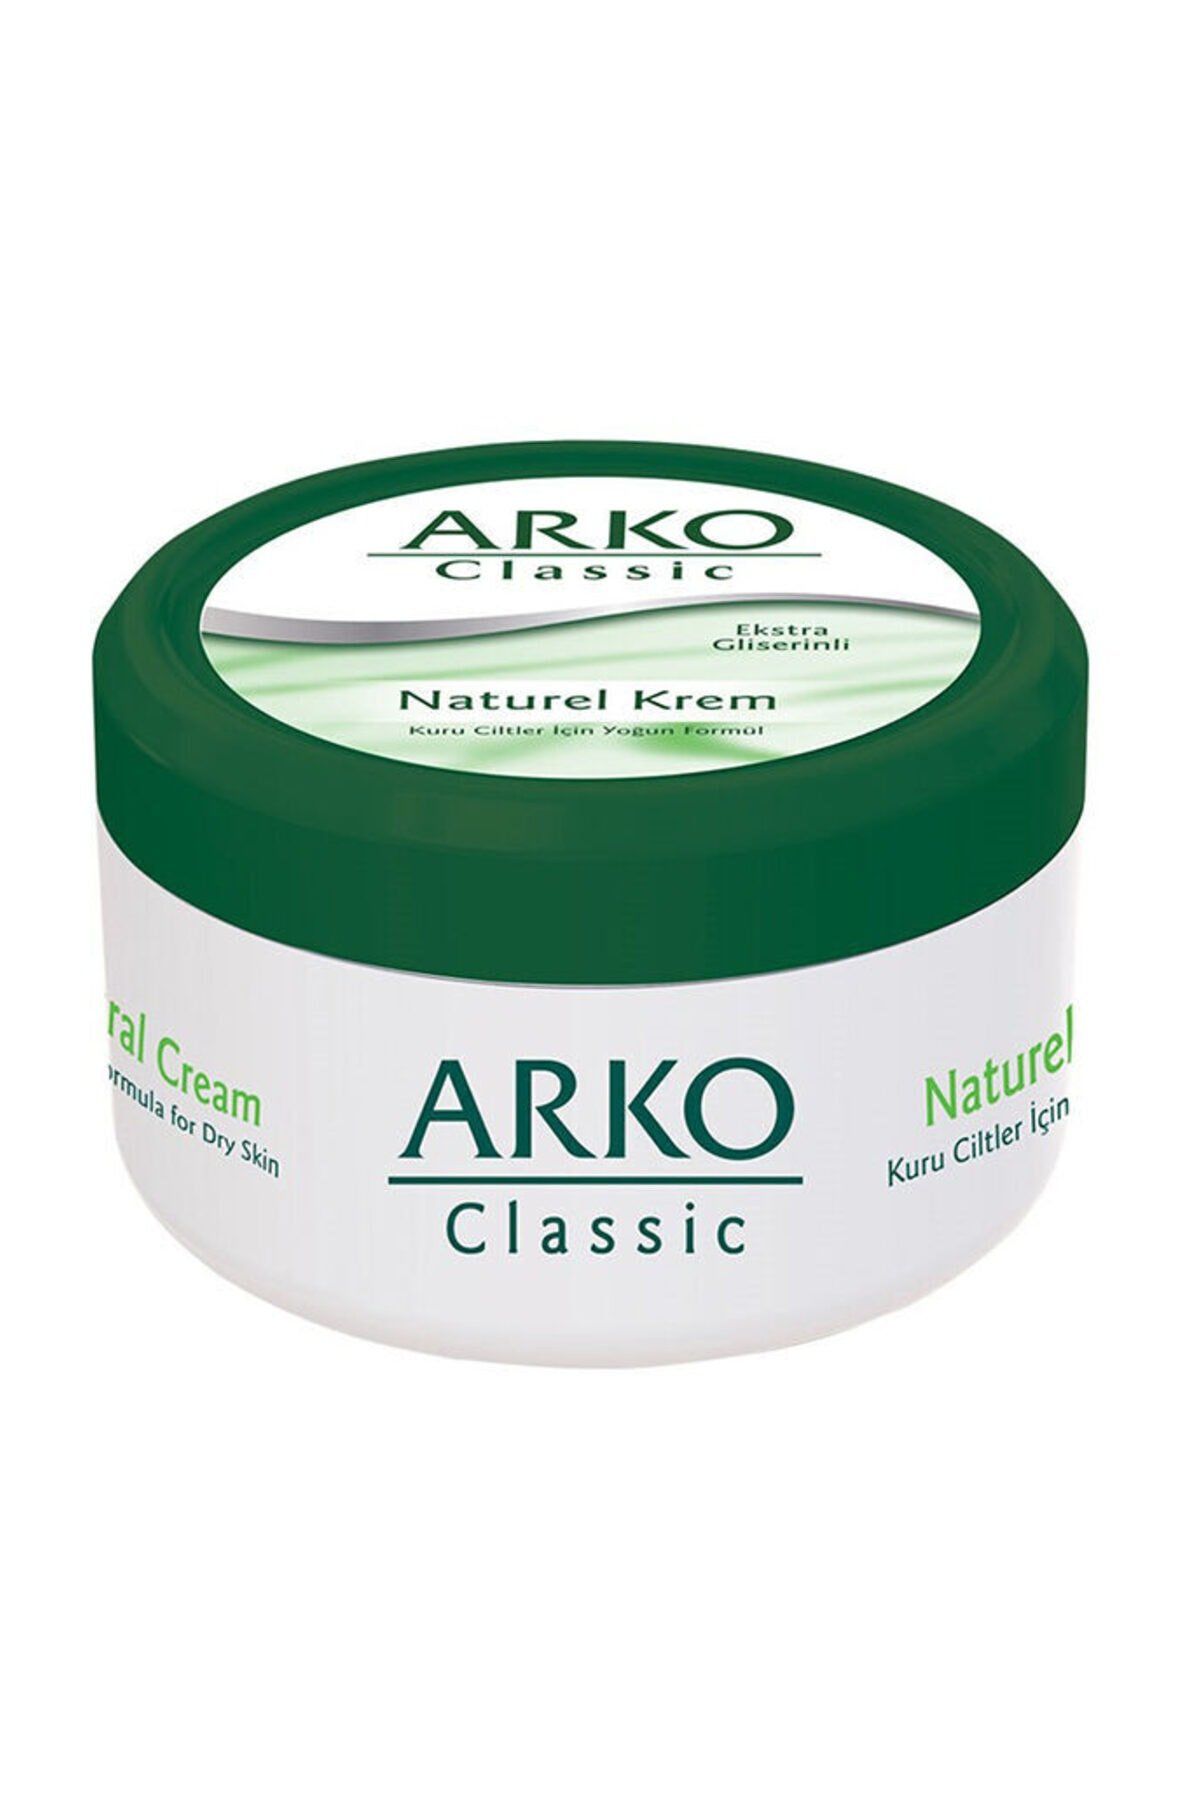 Arko Classic Naturel Krem 250ml